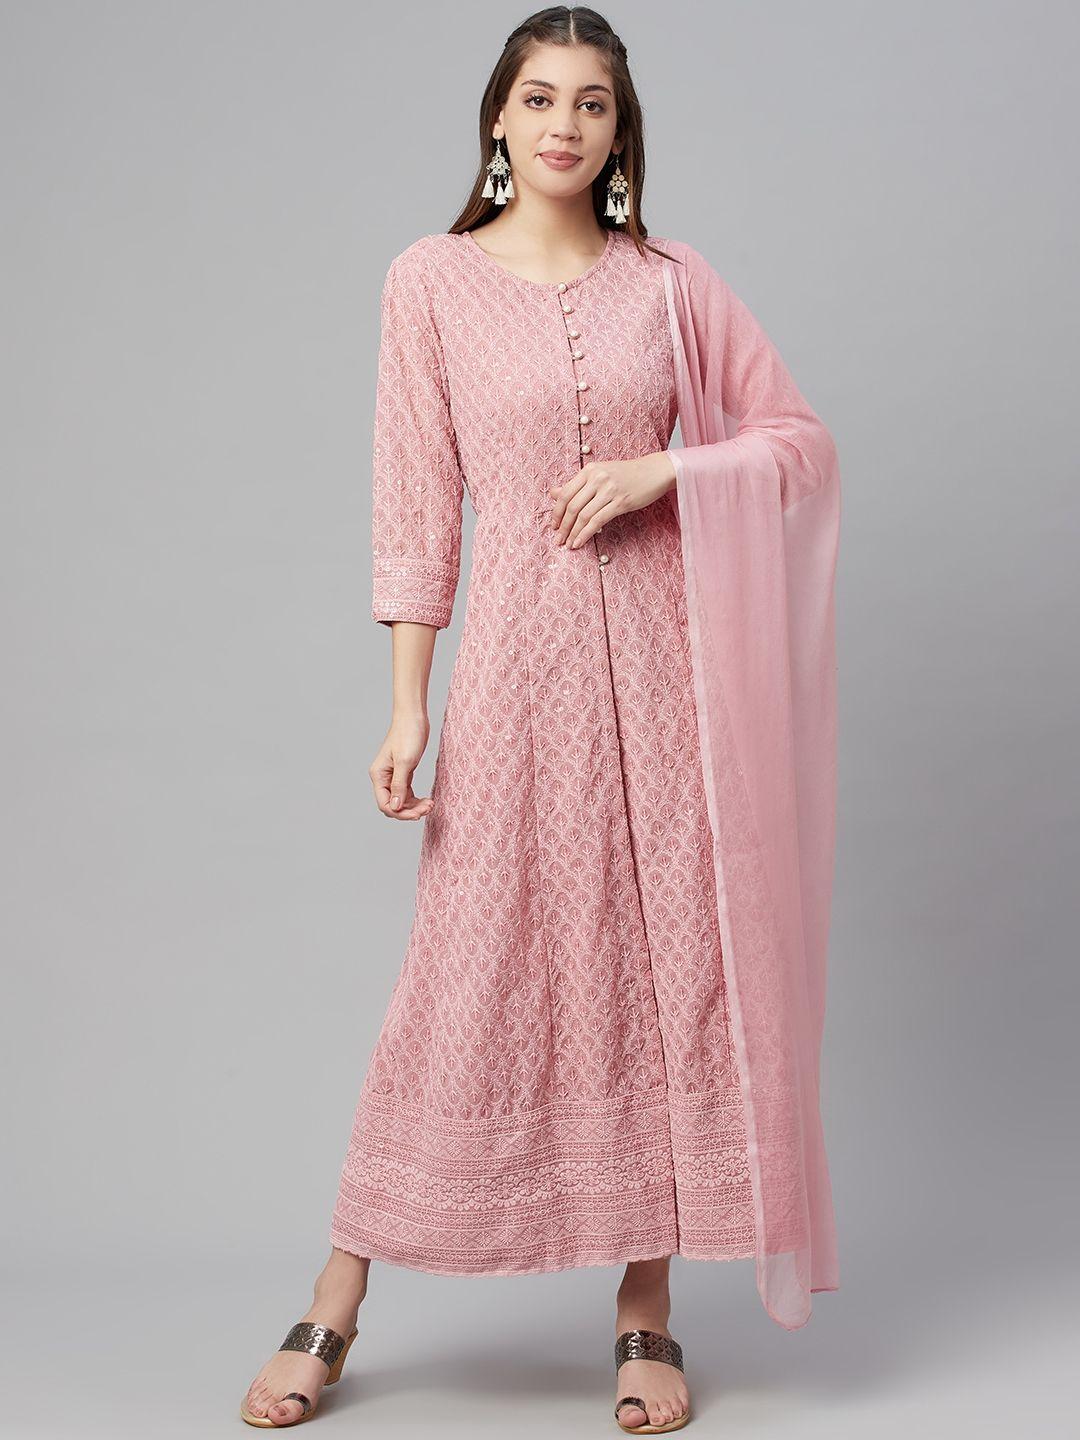 readiprint fashions women pink ethnic motifs embroidered kurta with dupatta